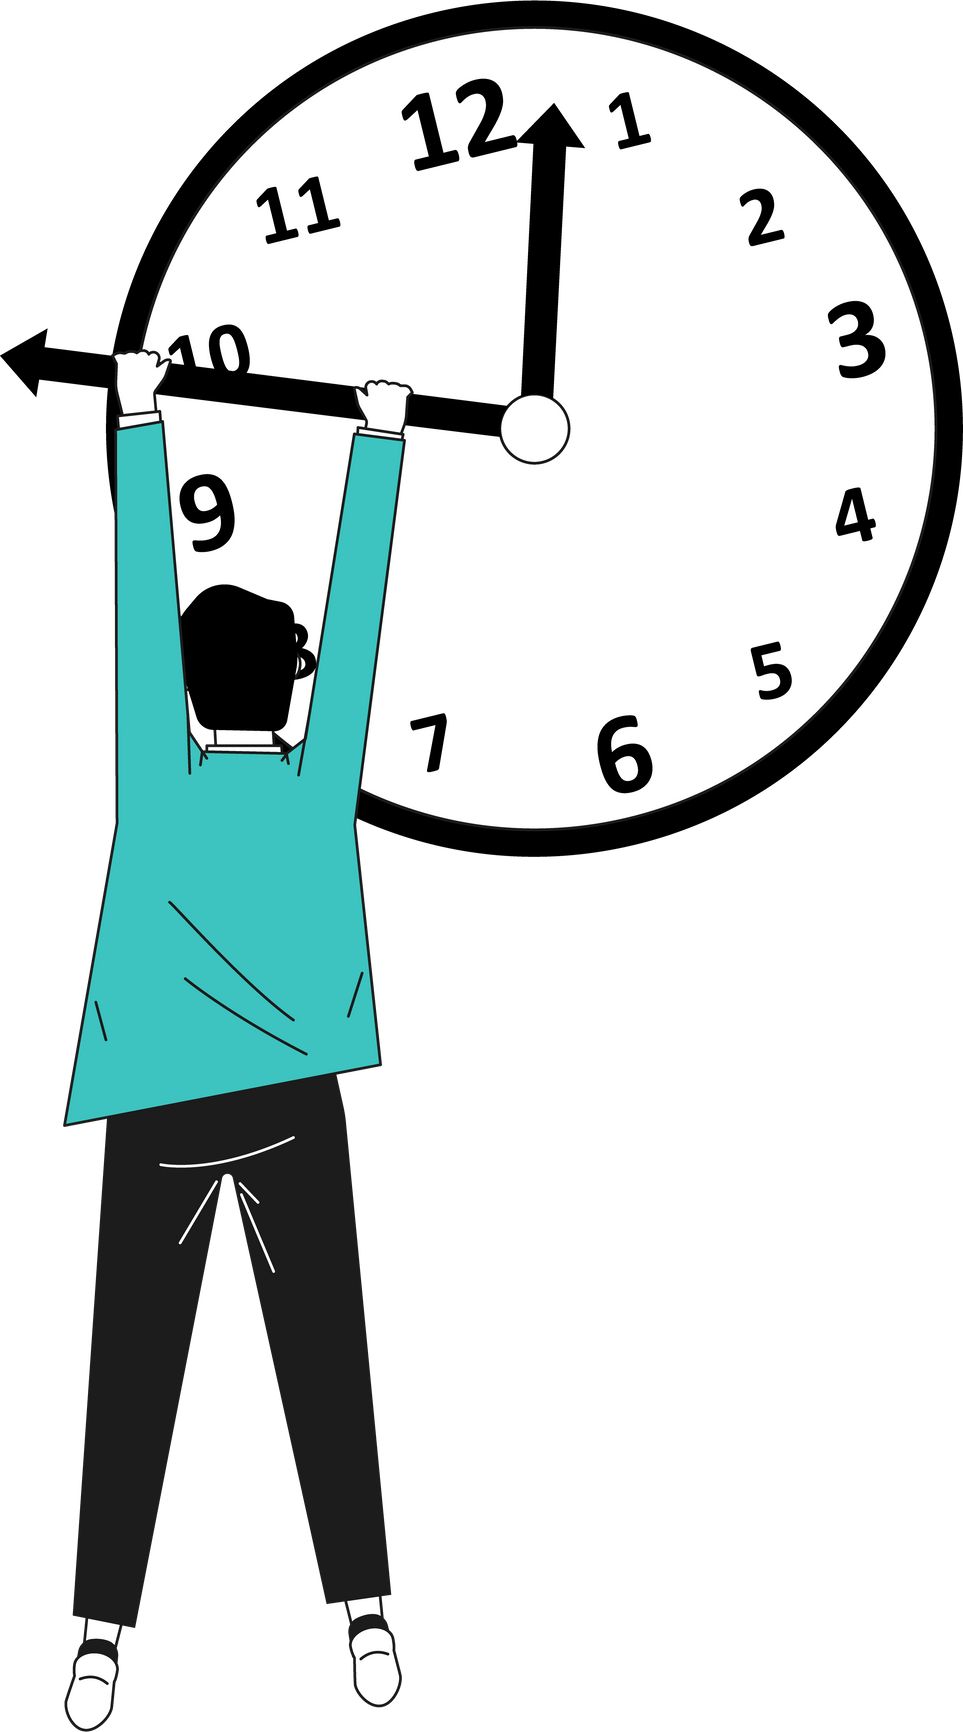 Man trying stop time. Boy holding clock arrow